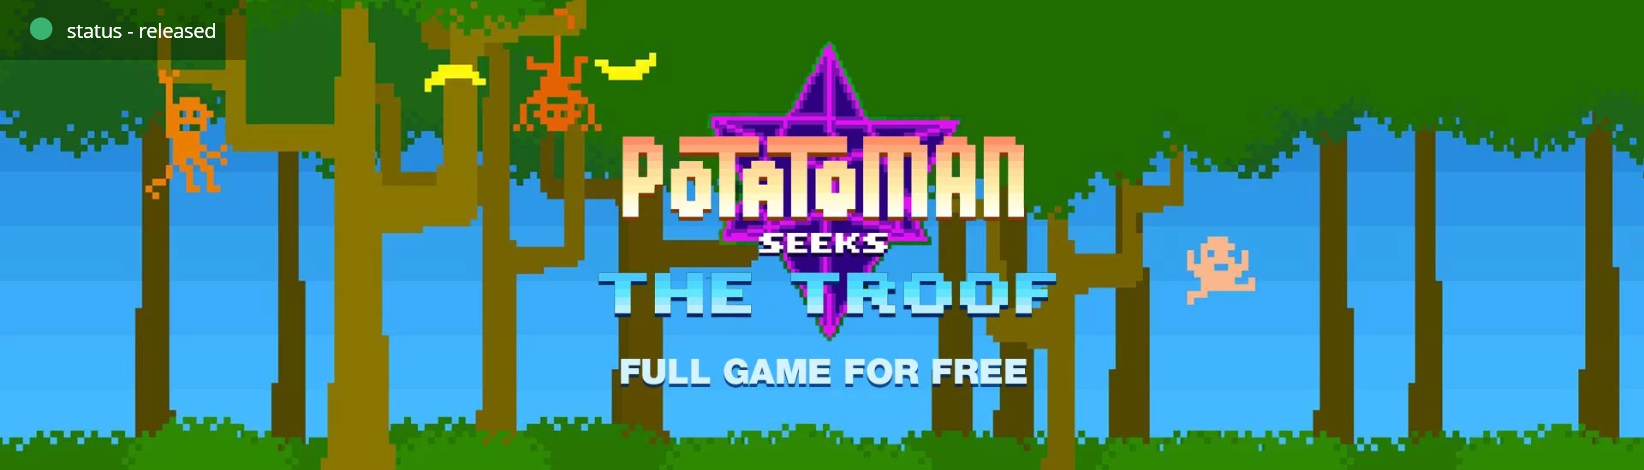 Screenshot_2019-05-29 Potatoman Seeks the Troof Indiegala Developers.png